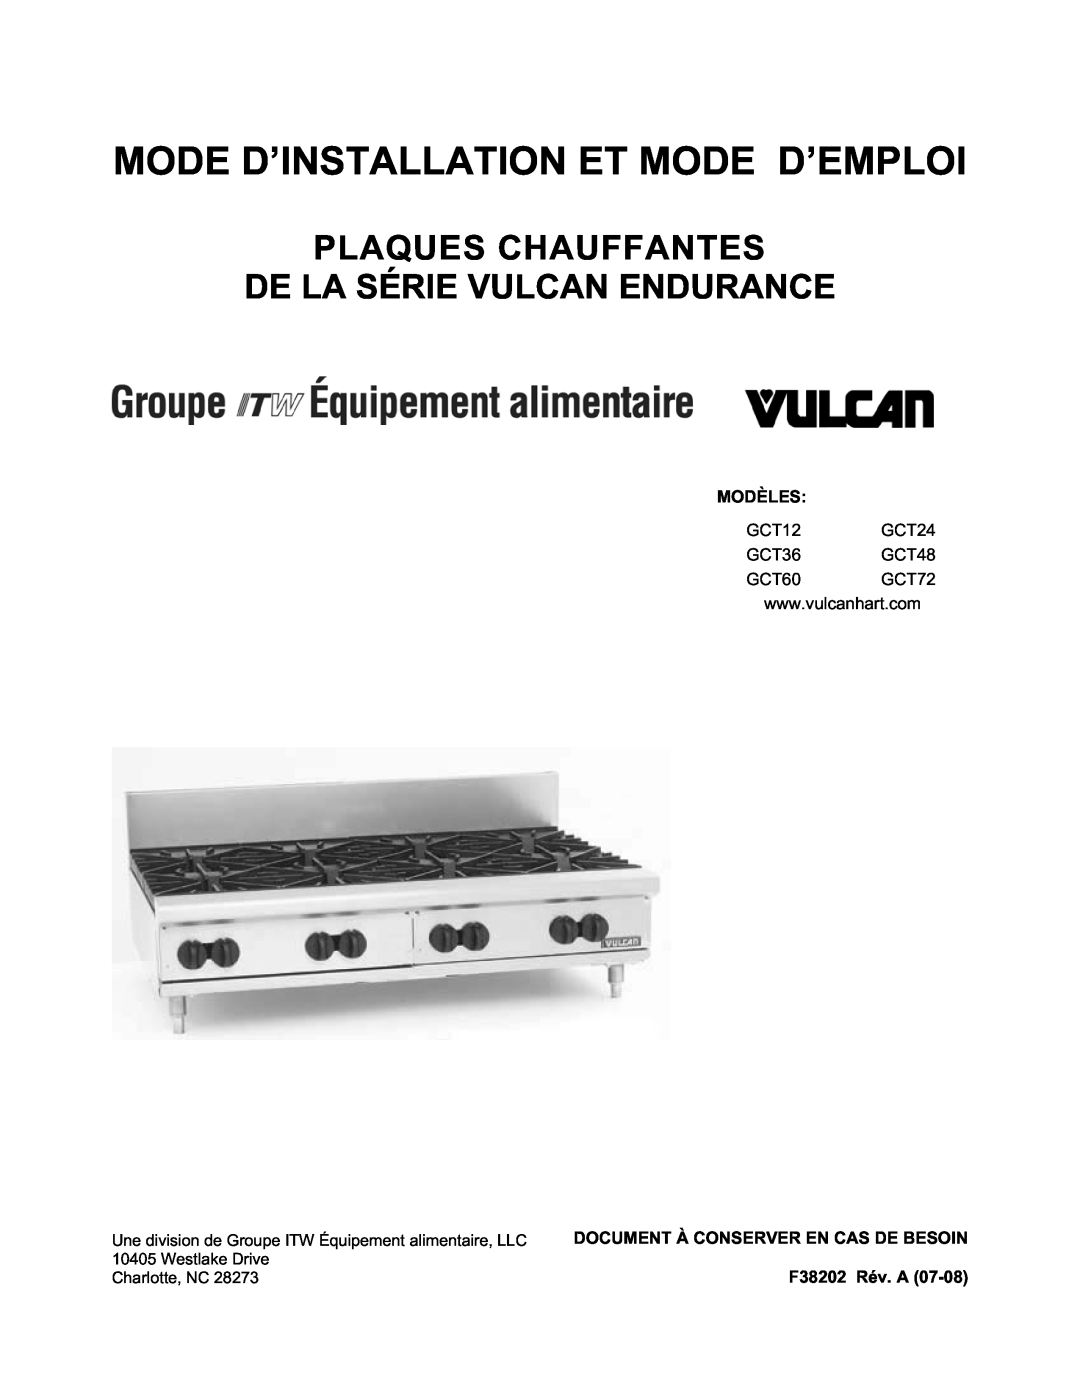 Vulcan-Hart GCT24, GCT60 Mode D’Installation Et Mode D’Emploi, Plaques Chauffantes De La Série Vulcan Endurance, Modèles 